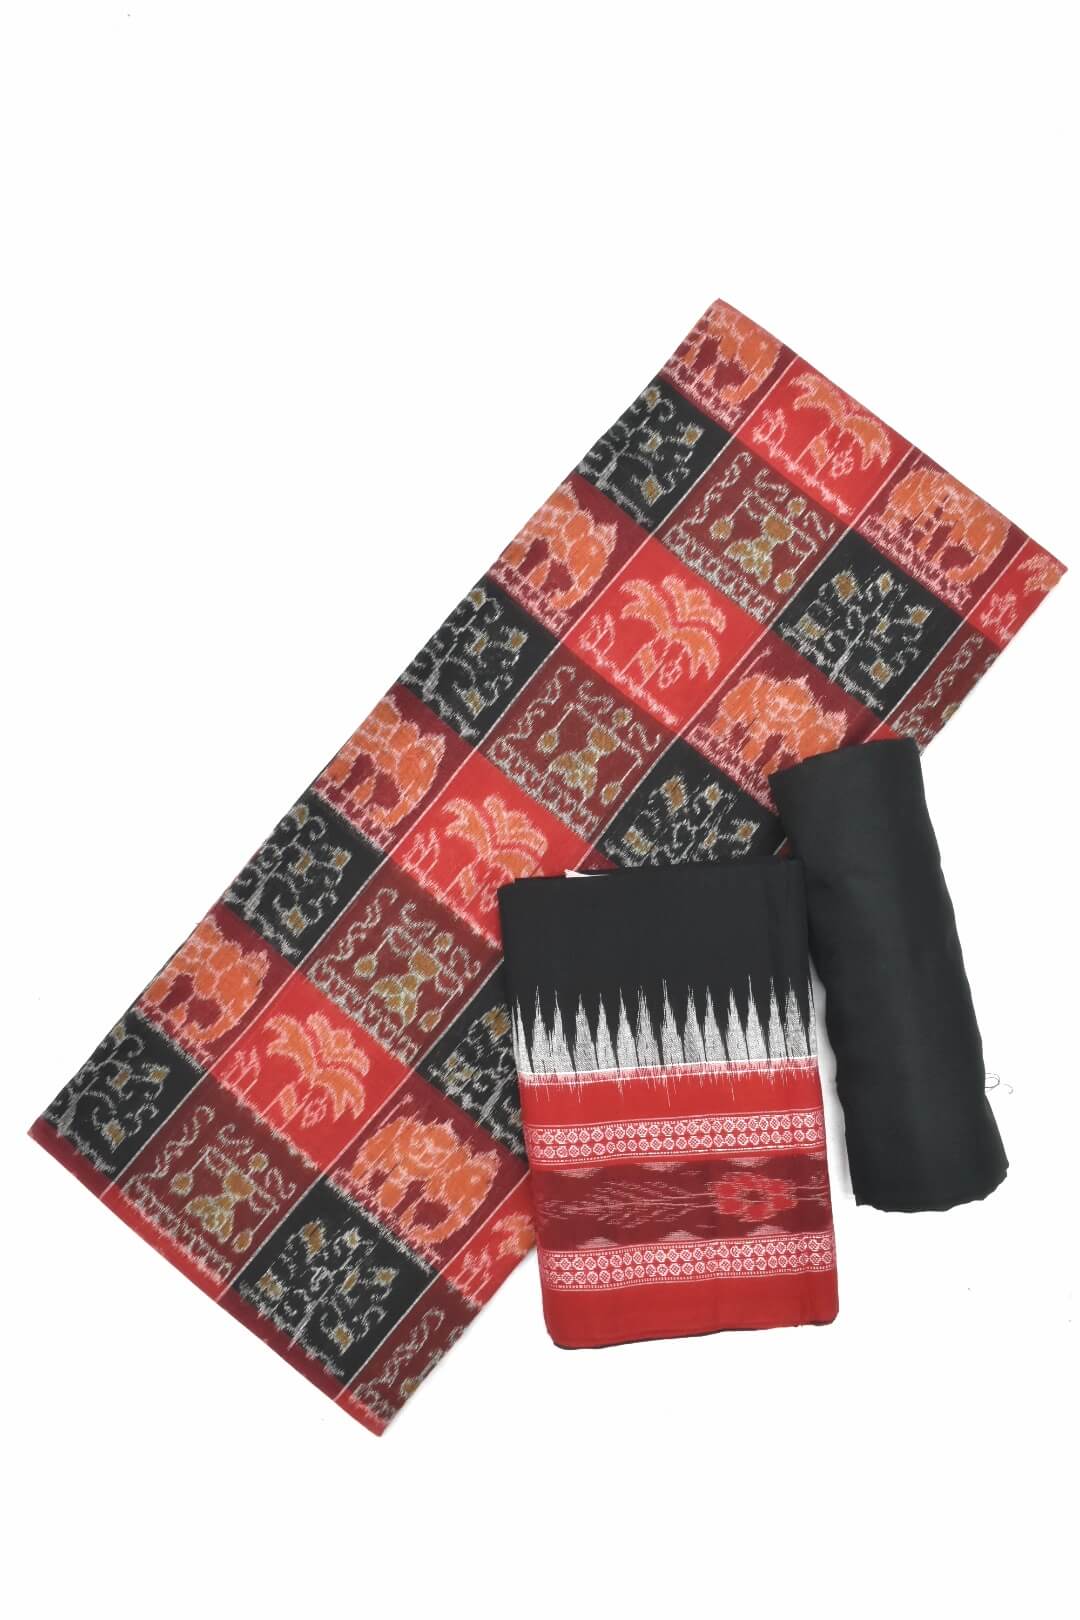 Red-Black Elephant Design Sambalpuri Handloom Cotton Dress Materials -  Sambalpuri Handloom Item